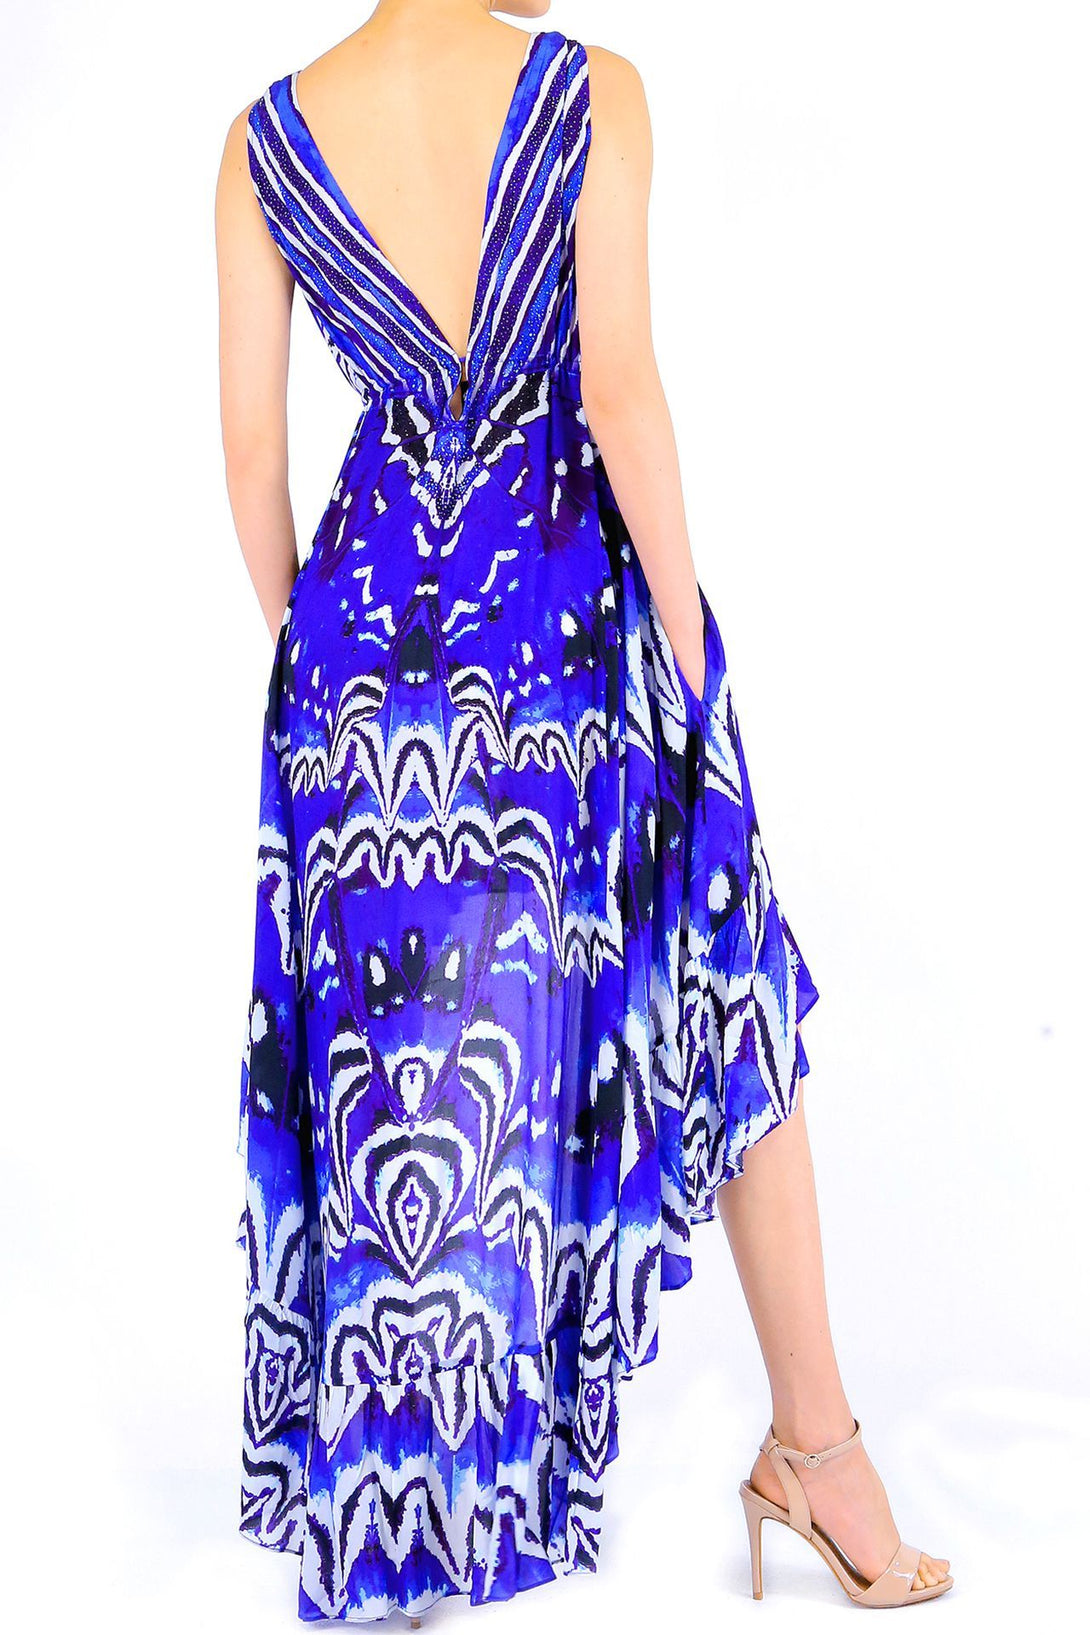  long blue dress formal, high and low cocktail dresses, plunging v neck formal dress, Shahida Parides,